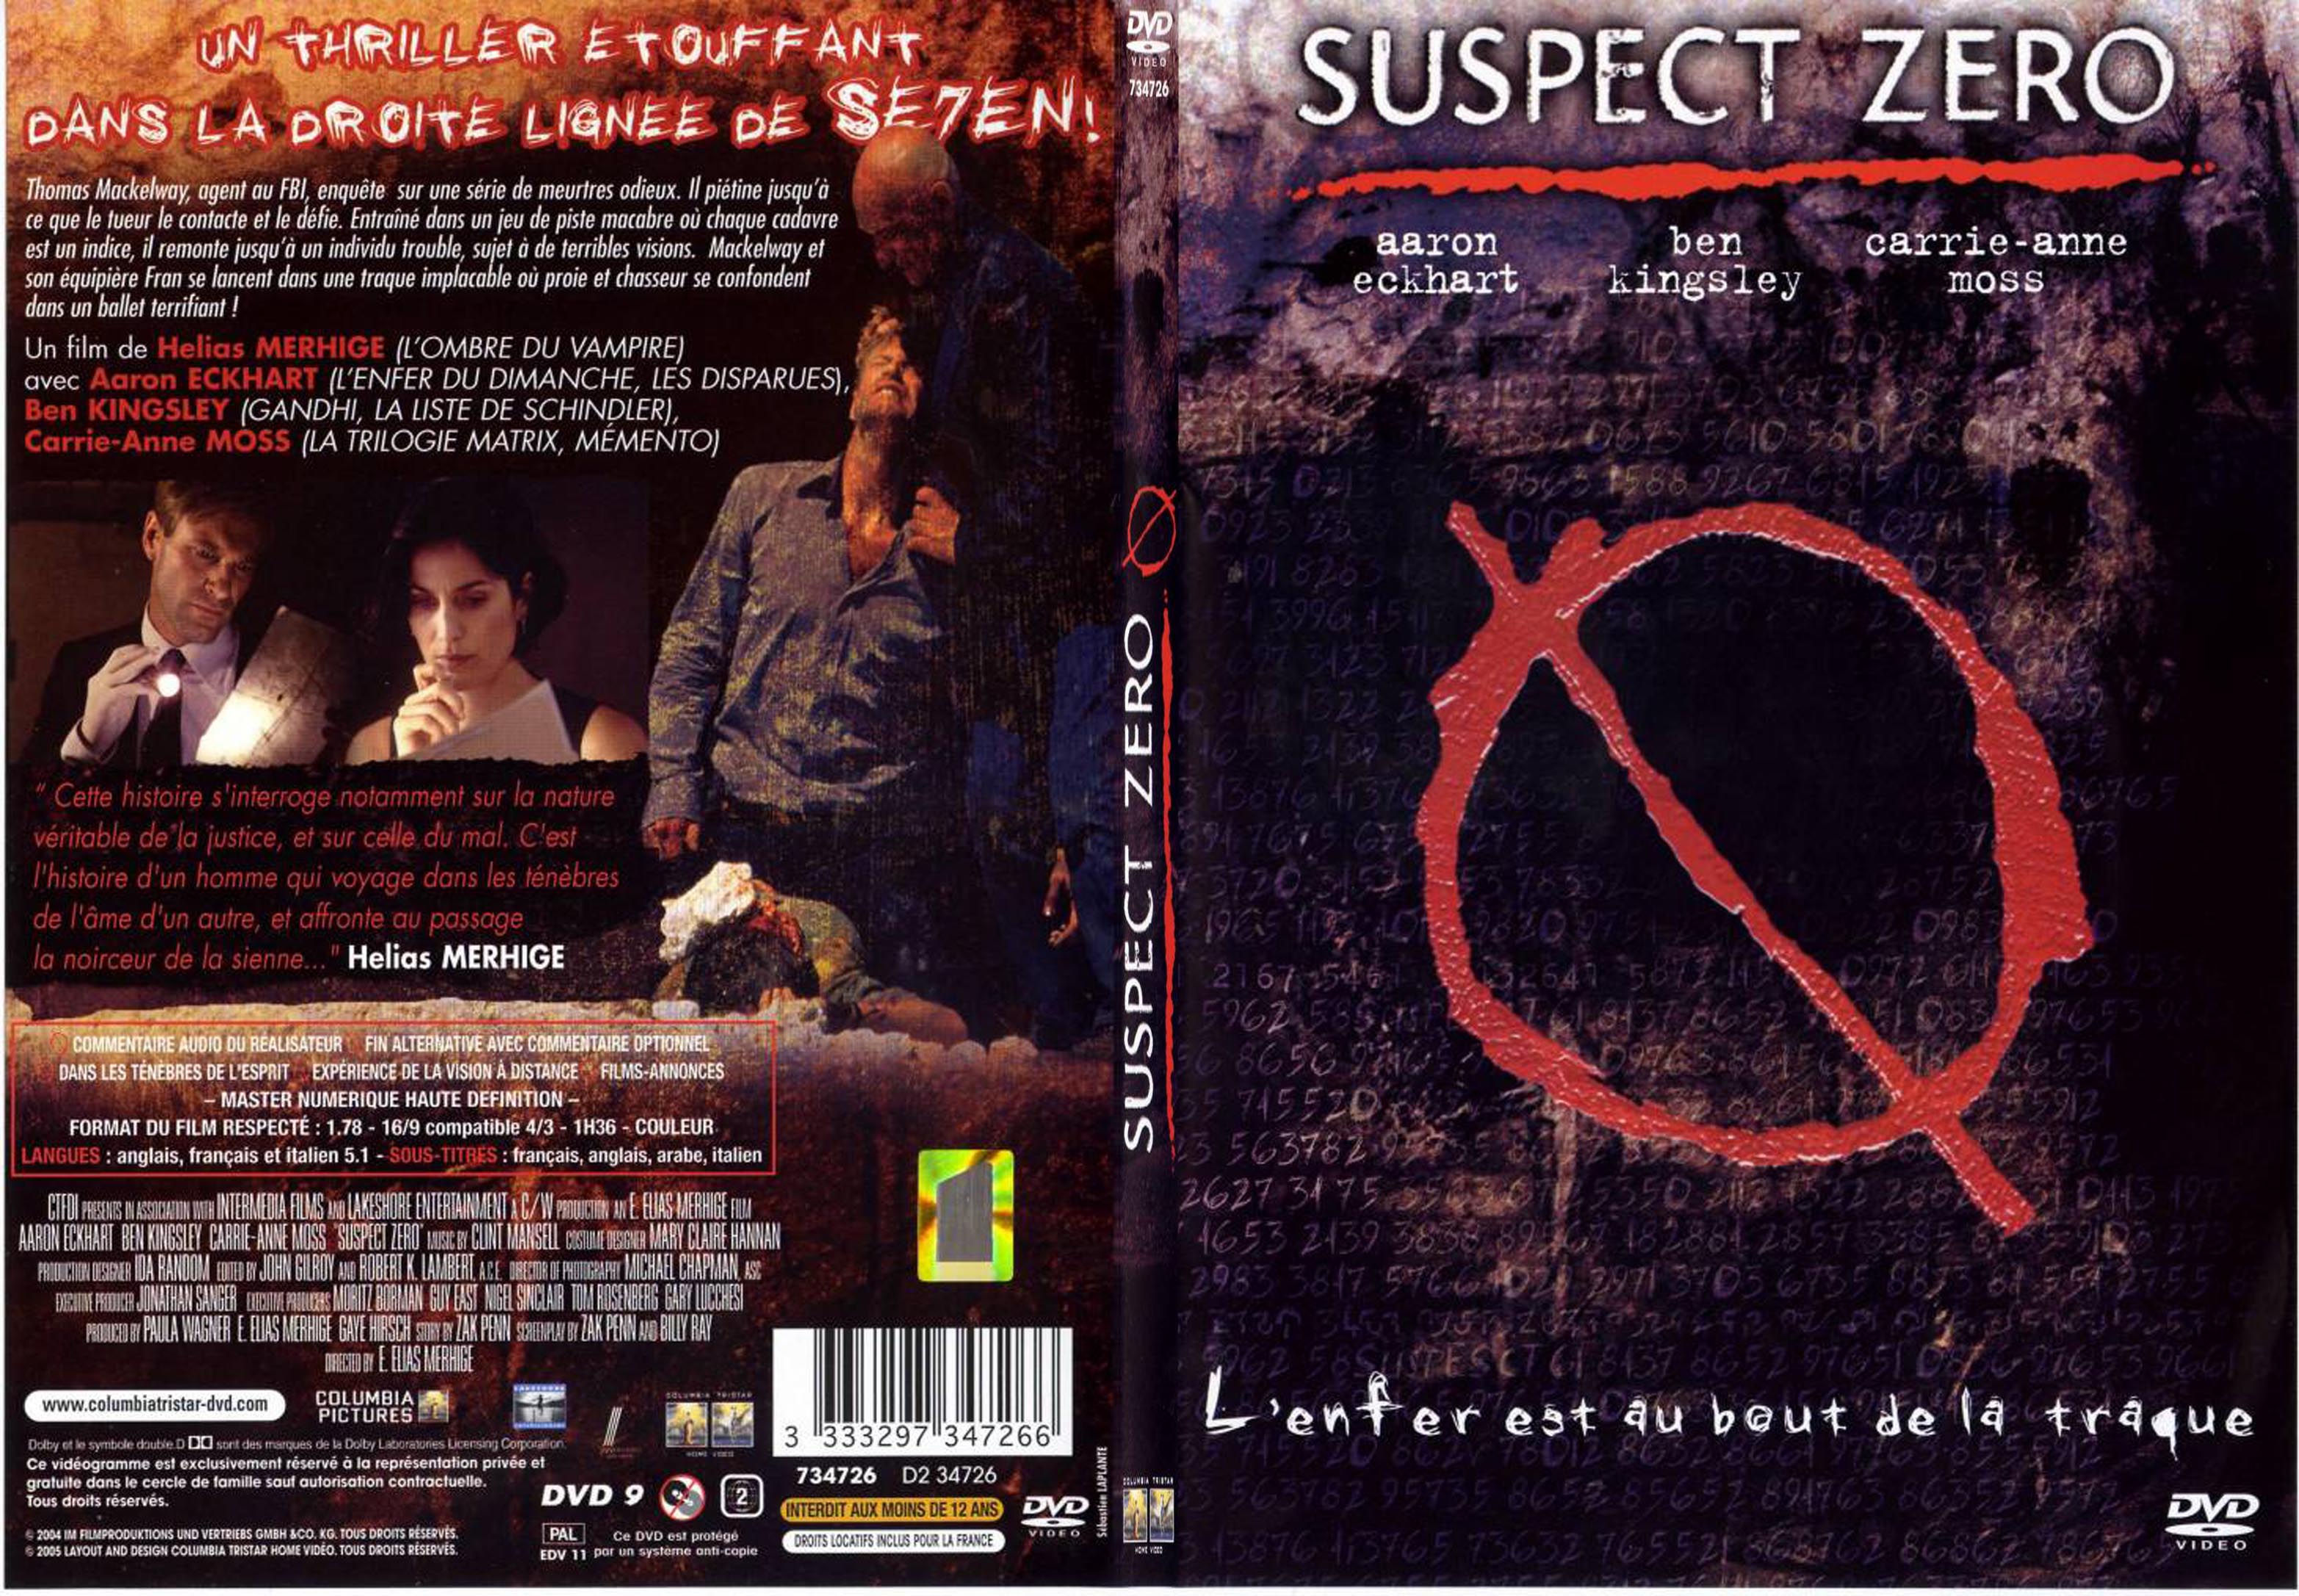 Jaquette DVD Suspect zero - SLIM